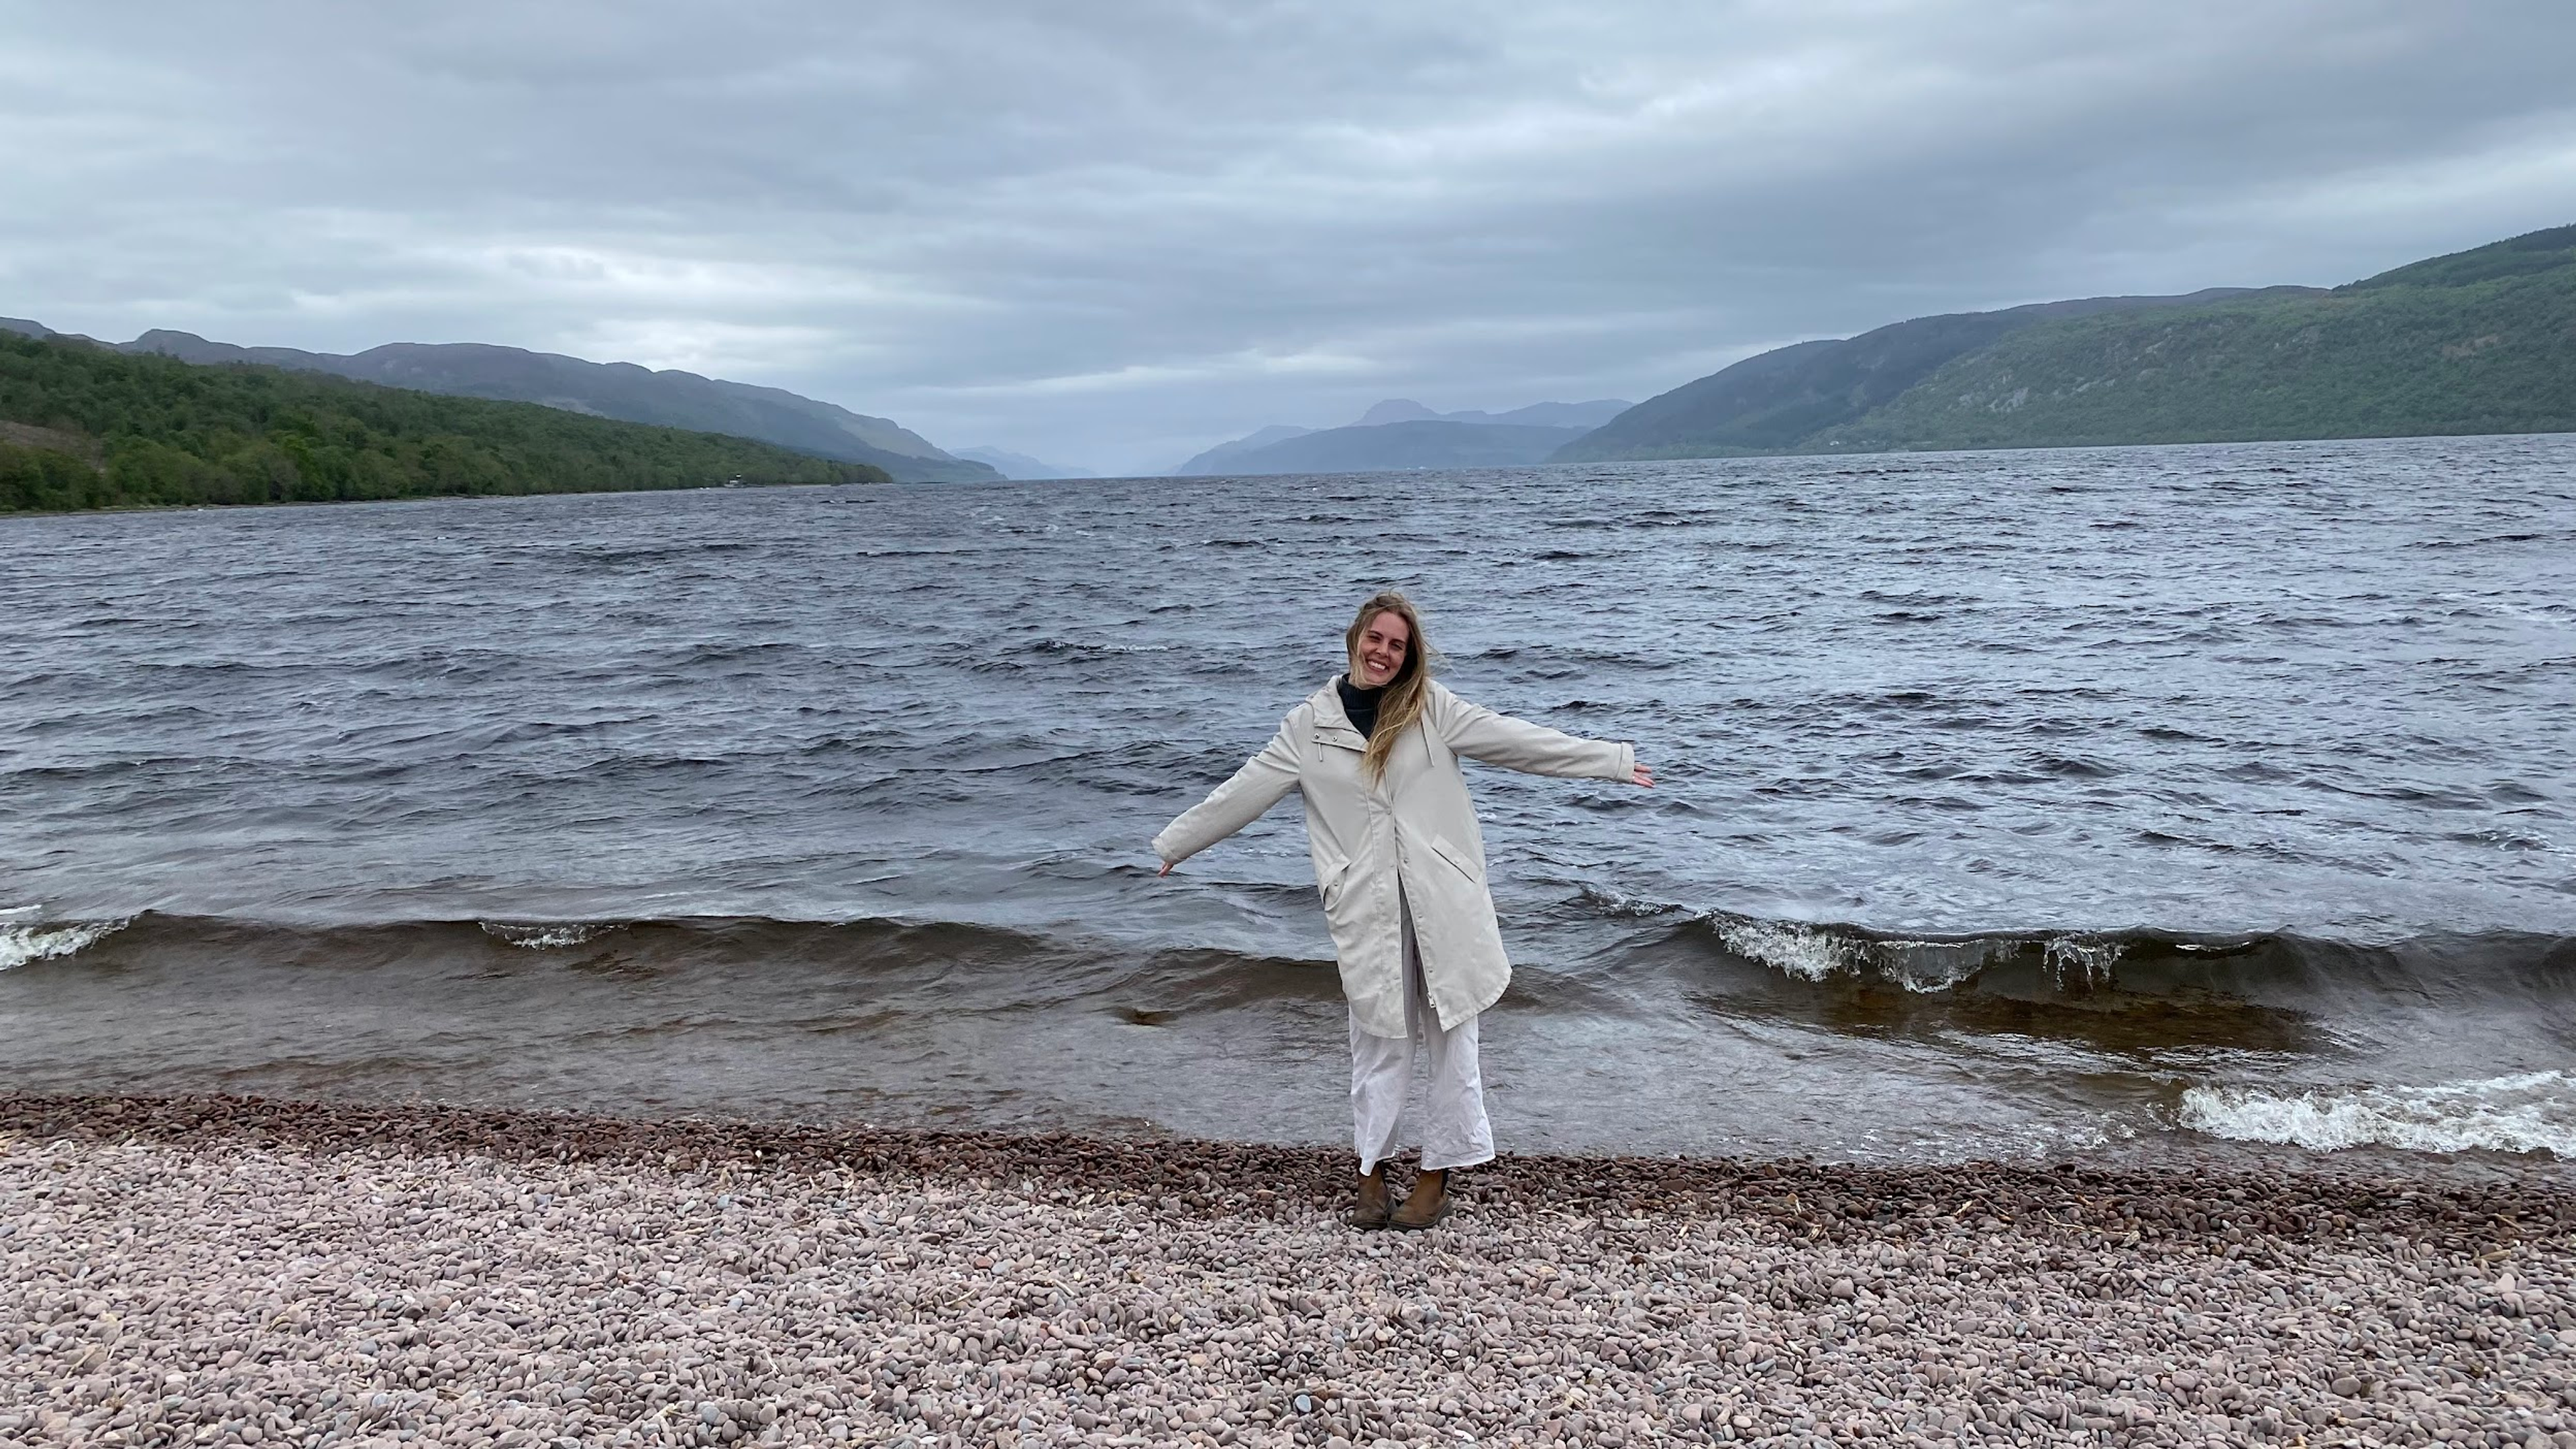 Phoebe on a rocky beach of Loch Ness